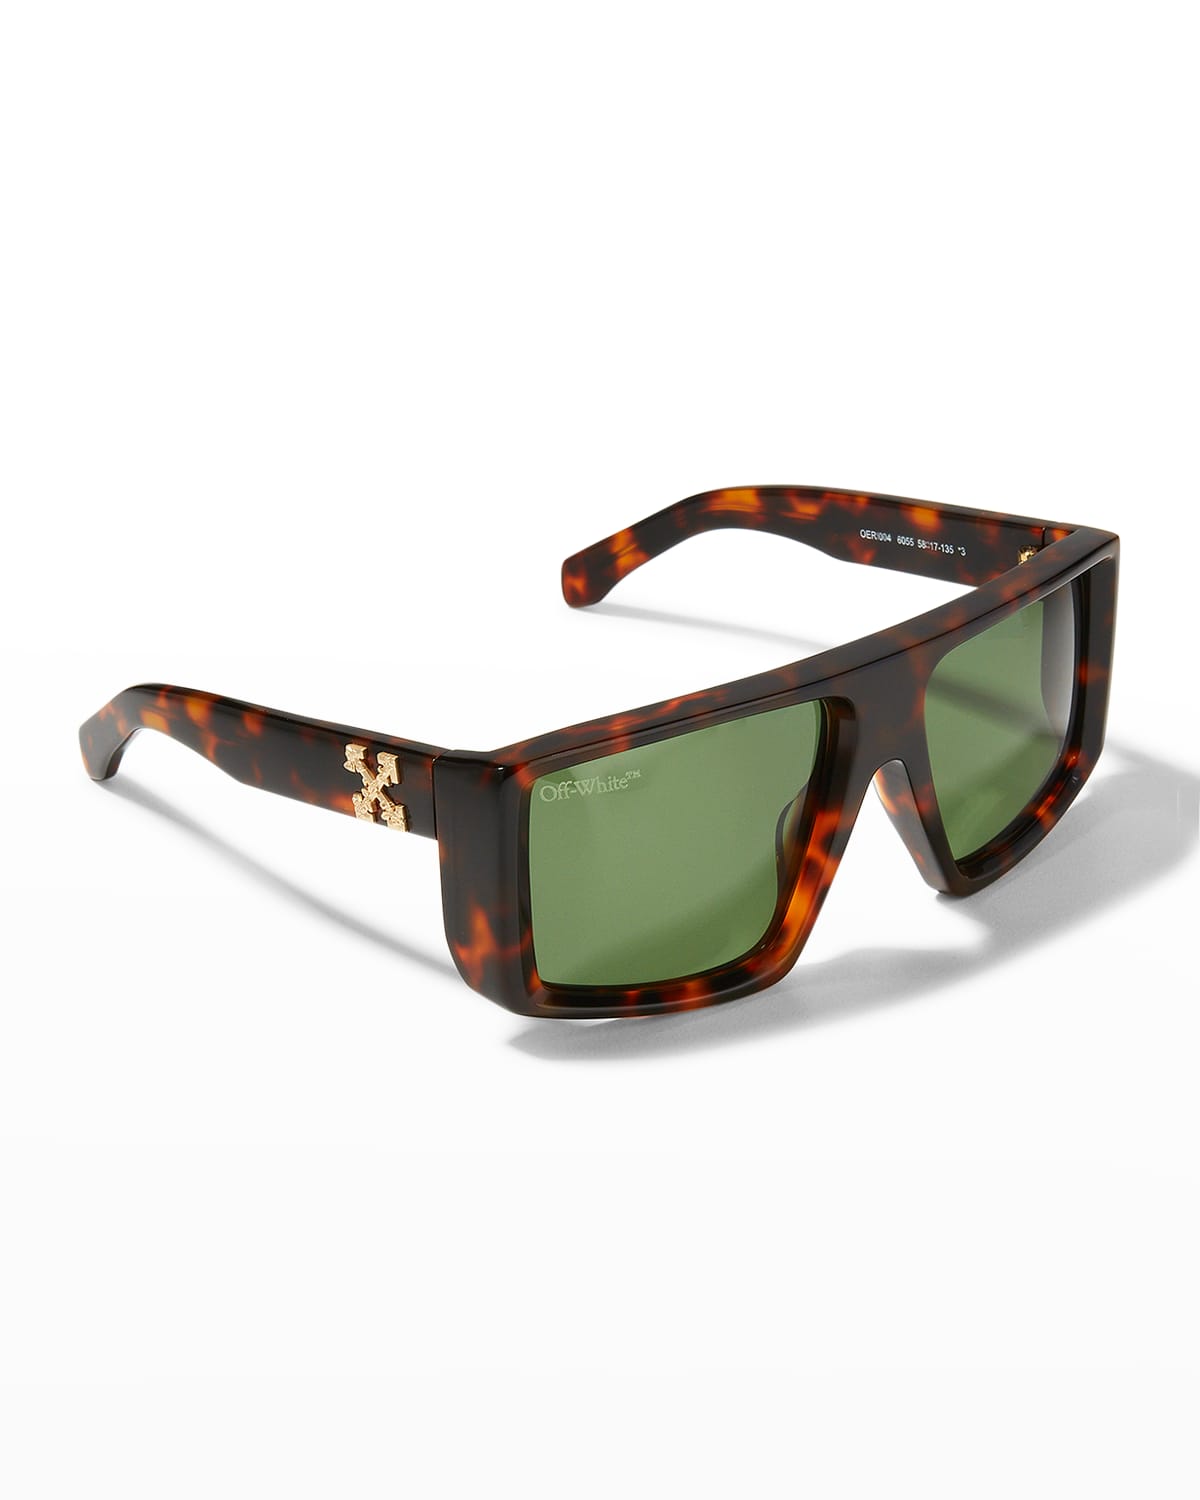 Off-white Alps Arrow Acetate Shield Sunglasses In Brown / Green